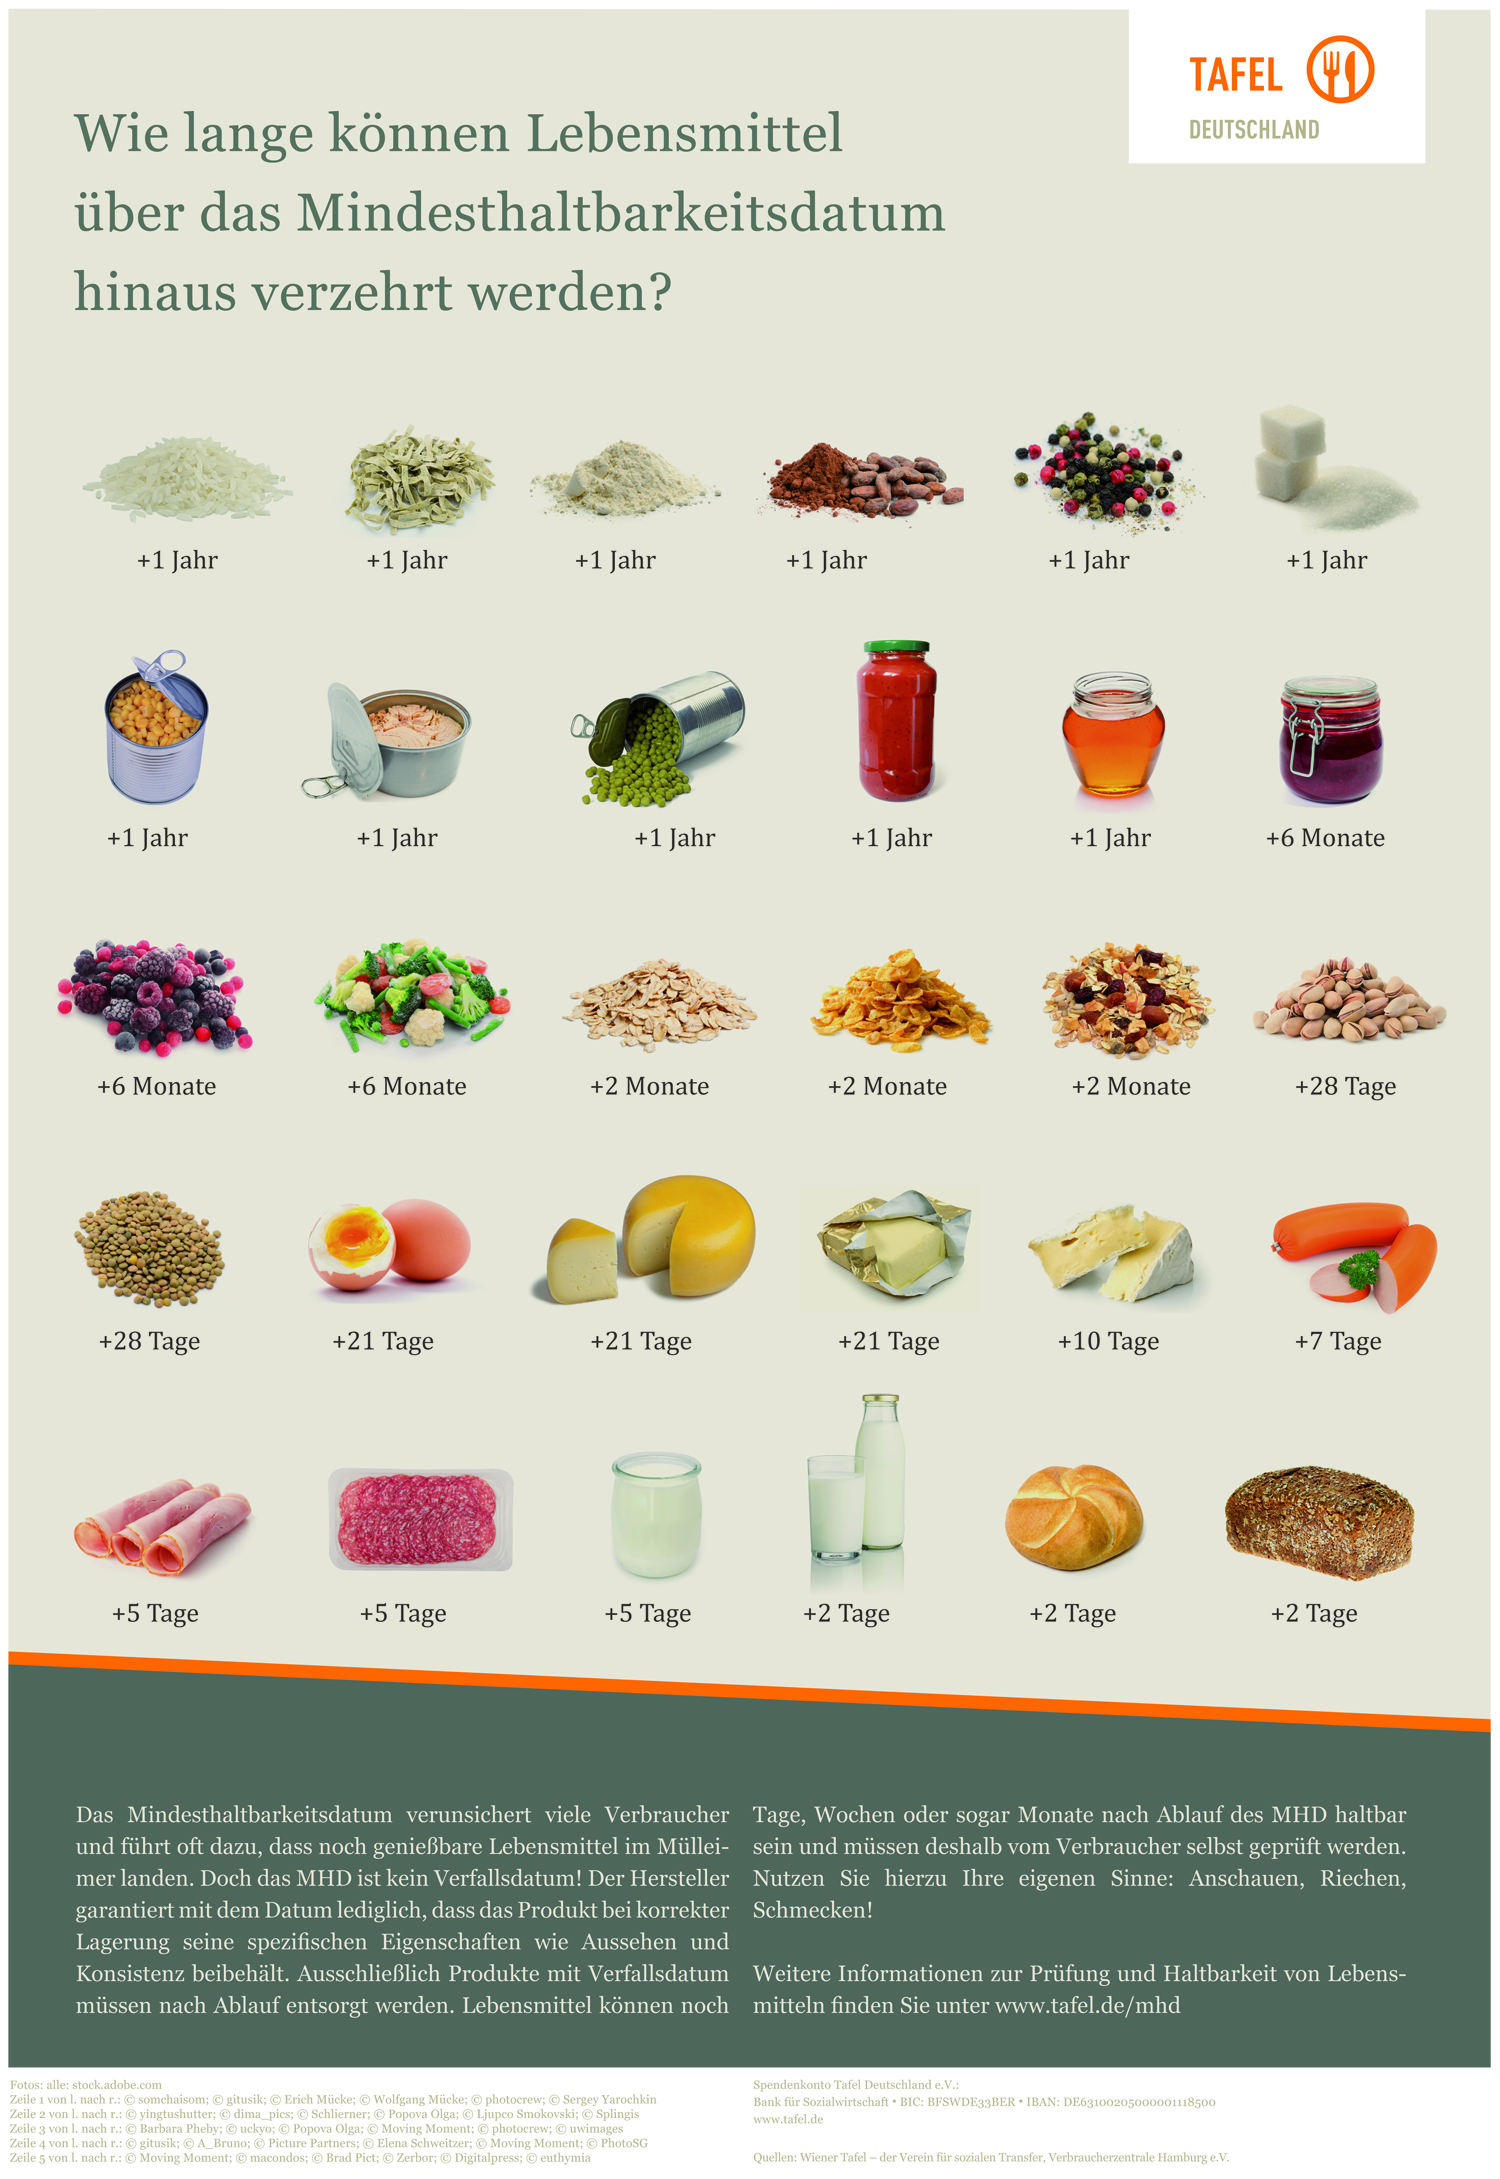 Mindesthaltbarkeitsdatum fördert Lebensmittelverschwendung, Plakat Tafel Deutschland